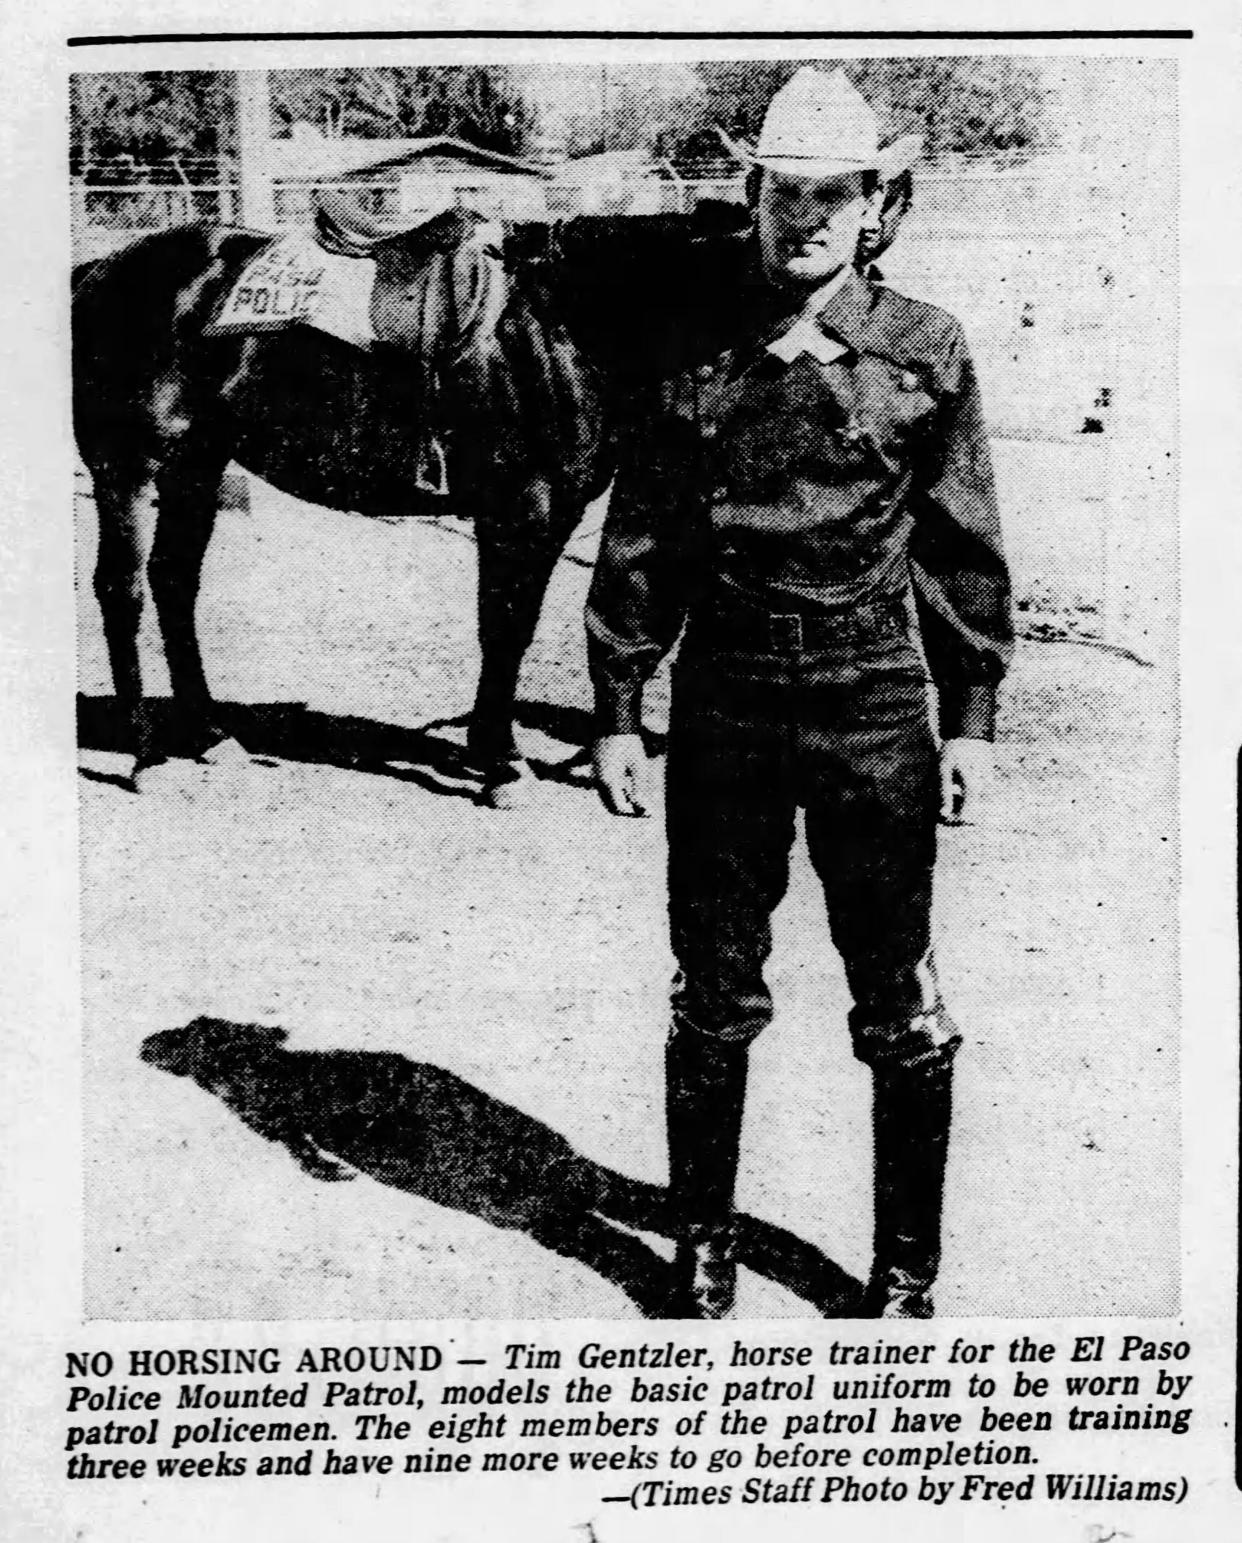 June 12, 1974: Tim Gentzler, horse trainer for the El Paso Mounted Patrol, models the basic patrol uniform to be worn by patrol policemen.